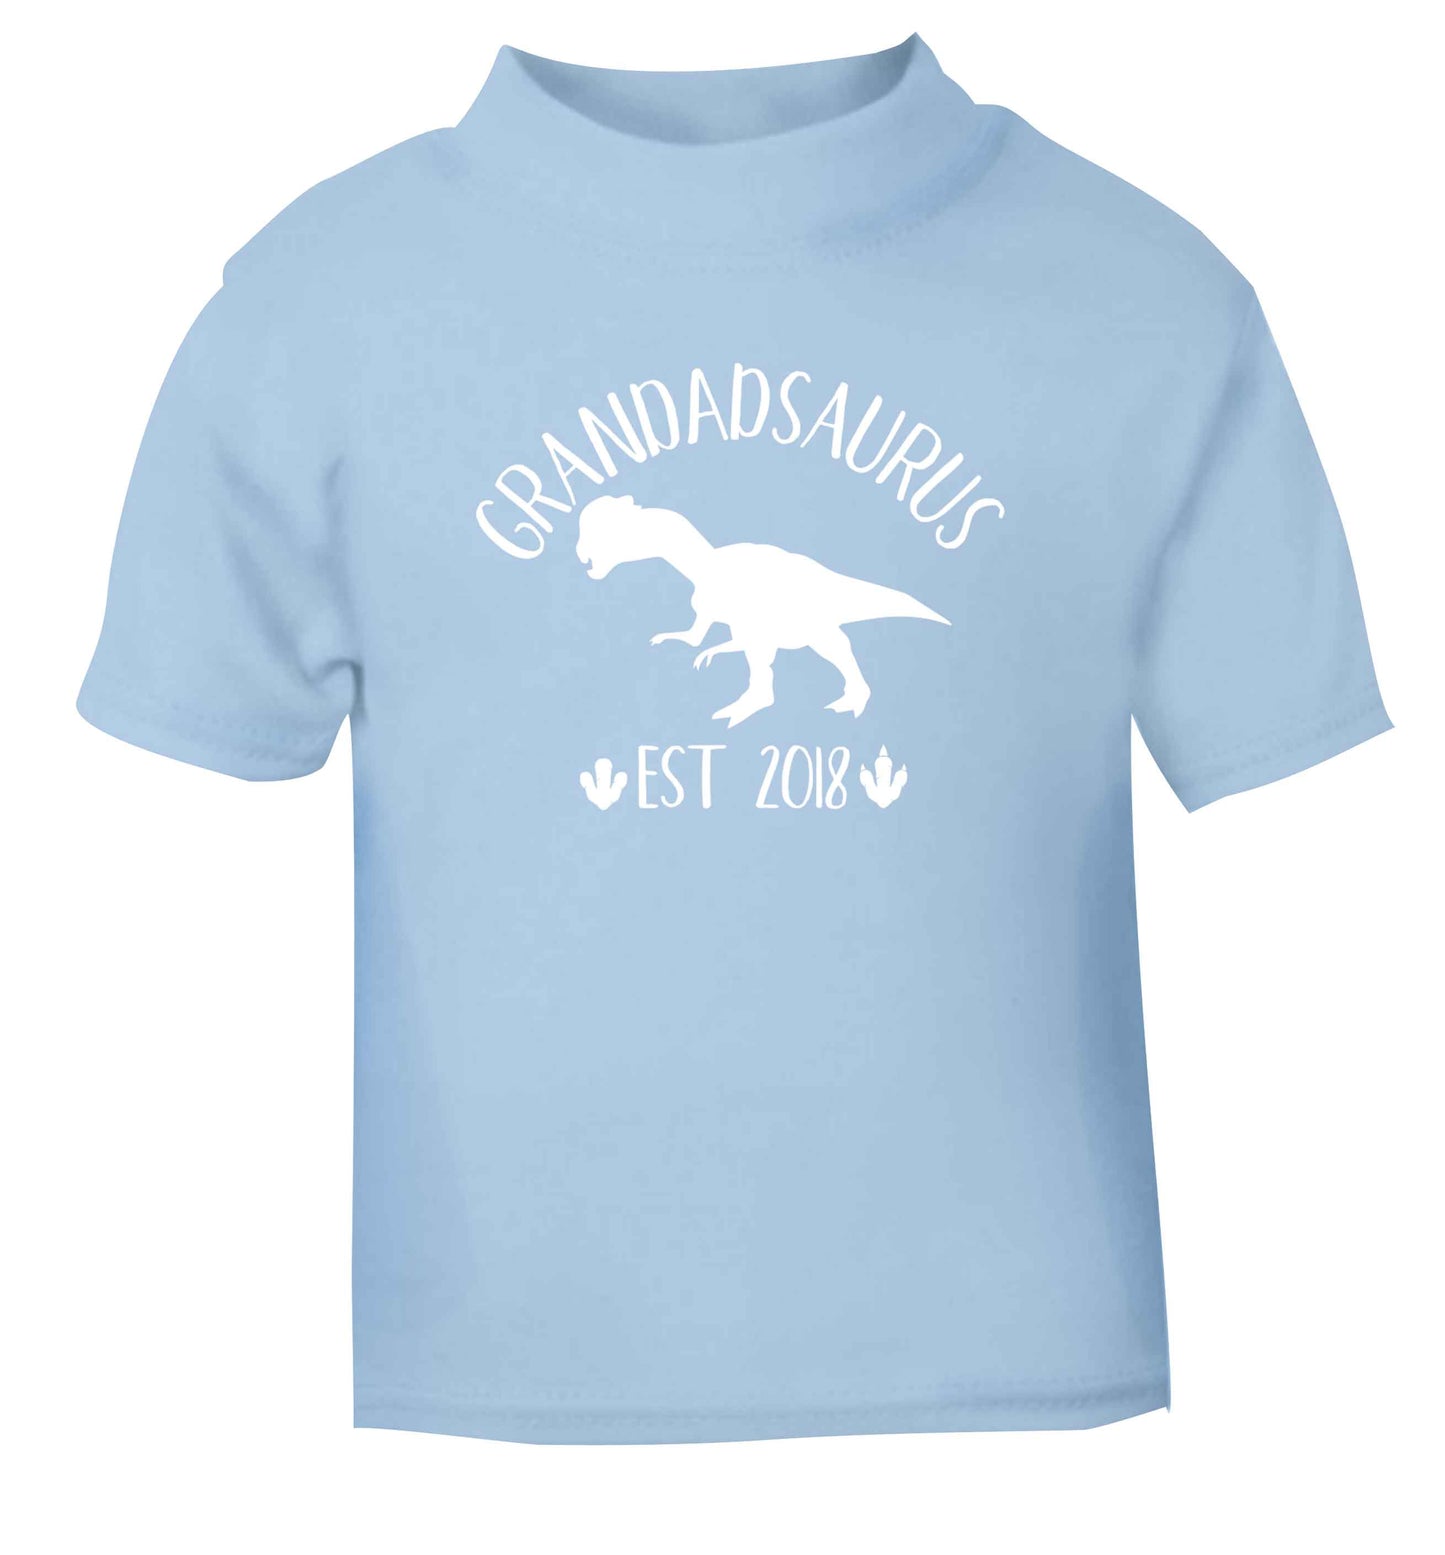 Personalised grandadsaurus since (custom date) light blue Baby Toddler Tshirt 2 Years